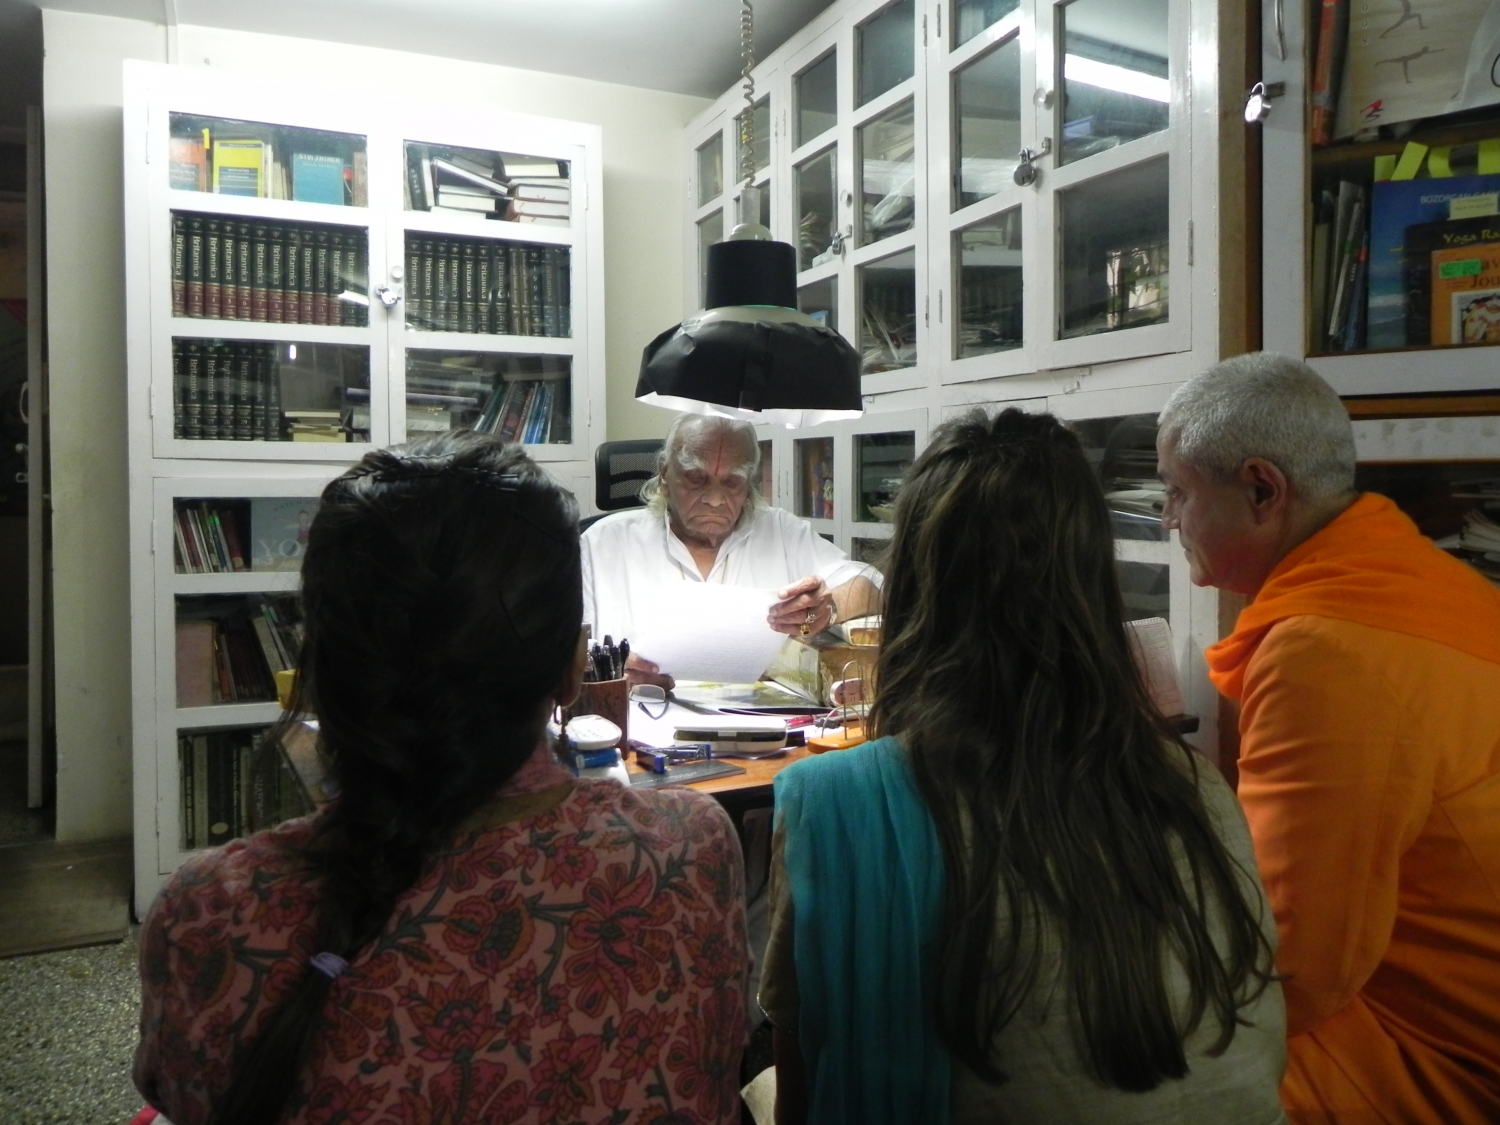 Encuento de H.H. Jagat Guru Amrta Súryánanda Mahá Rája con H.H. B.K.S. Iyengar Jí Mahá Rája  - Pune, India - 2011, octubre